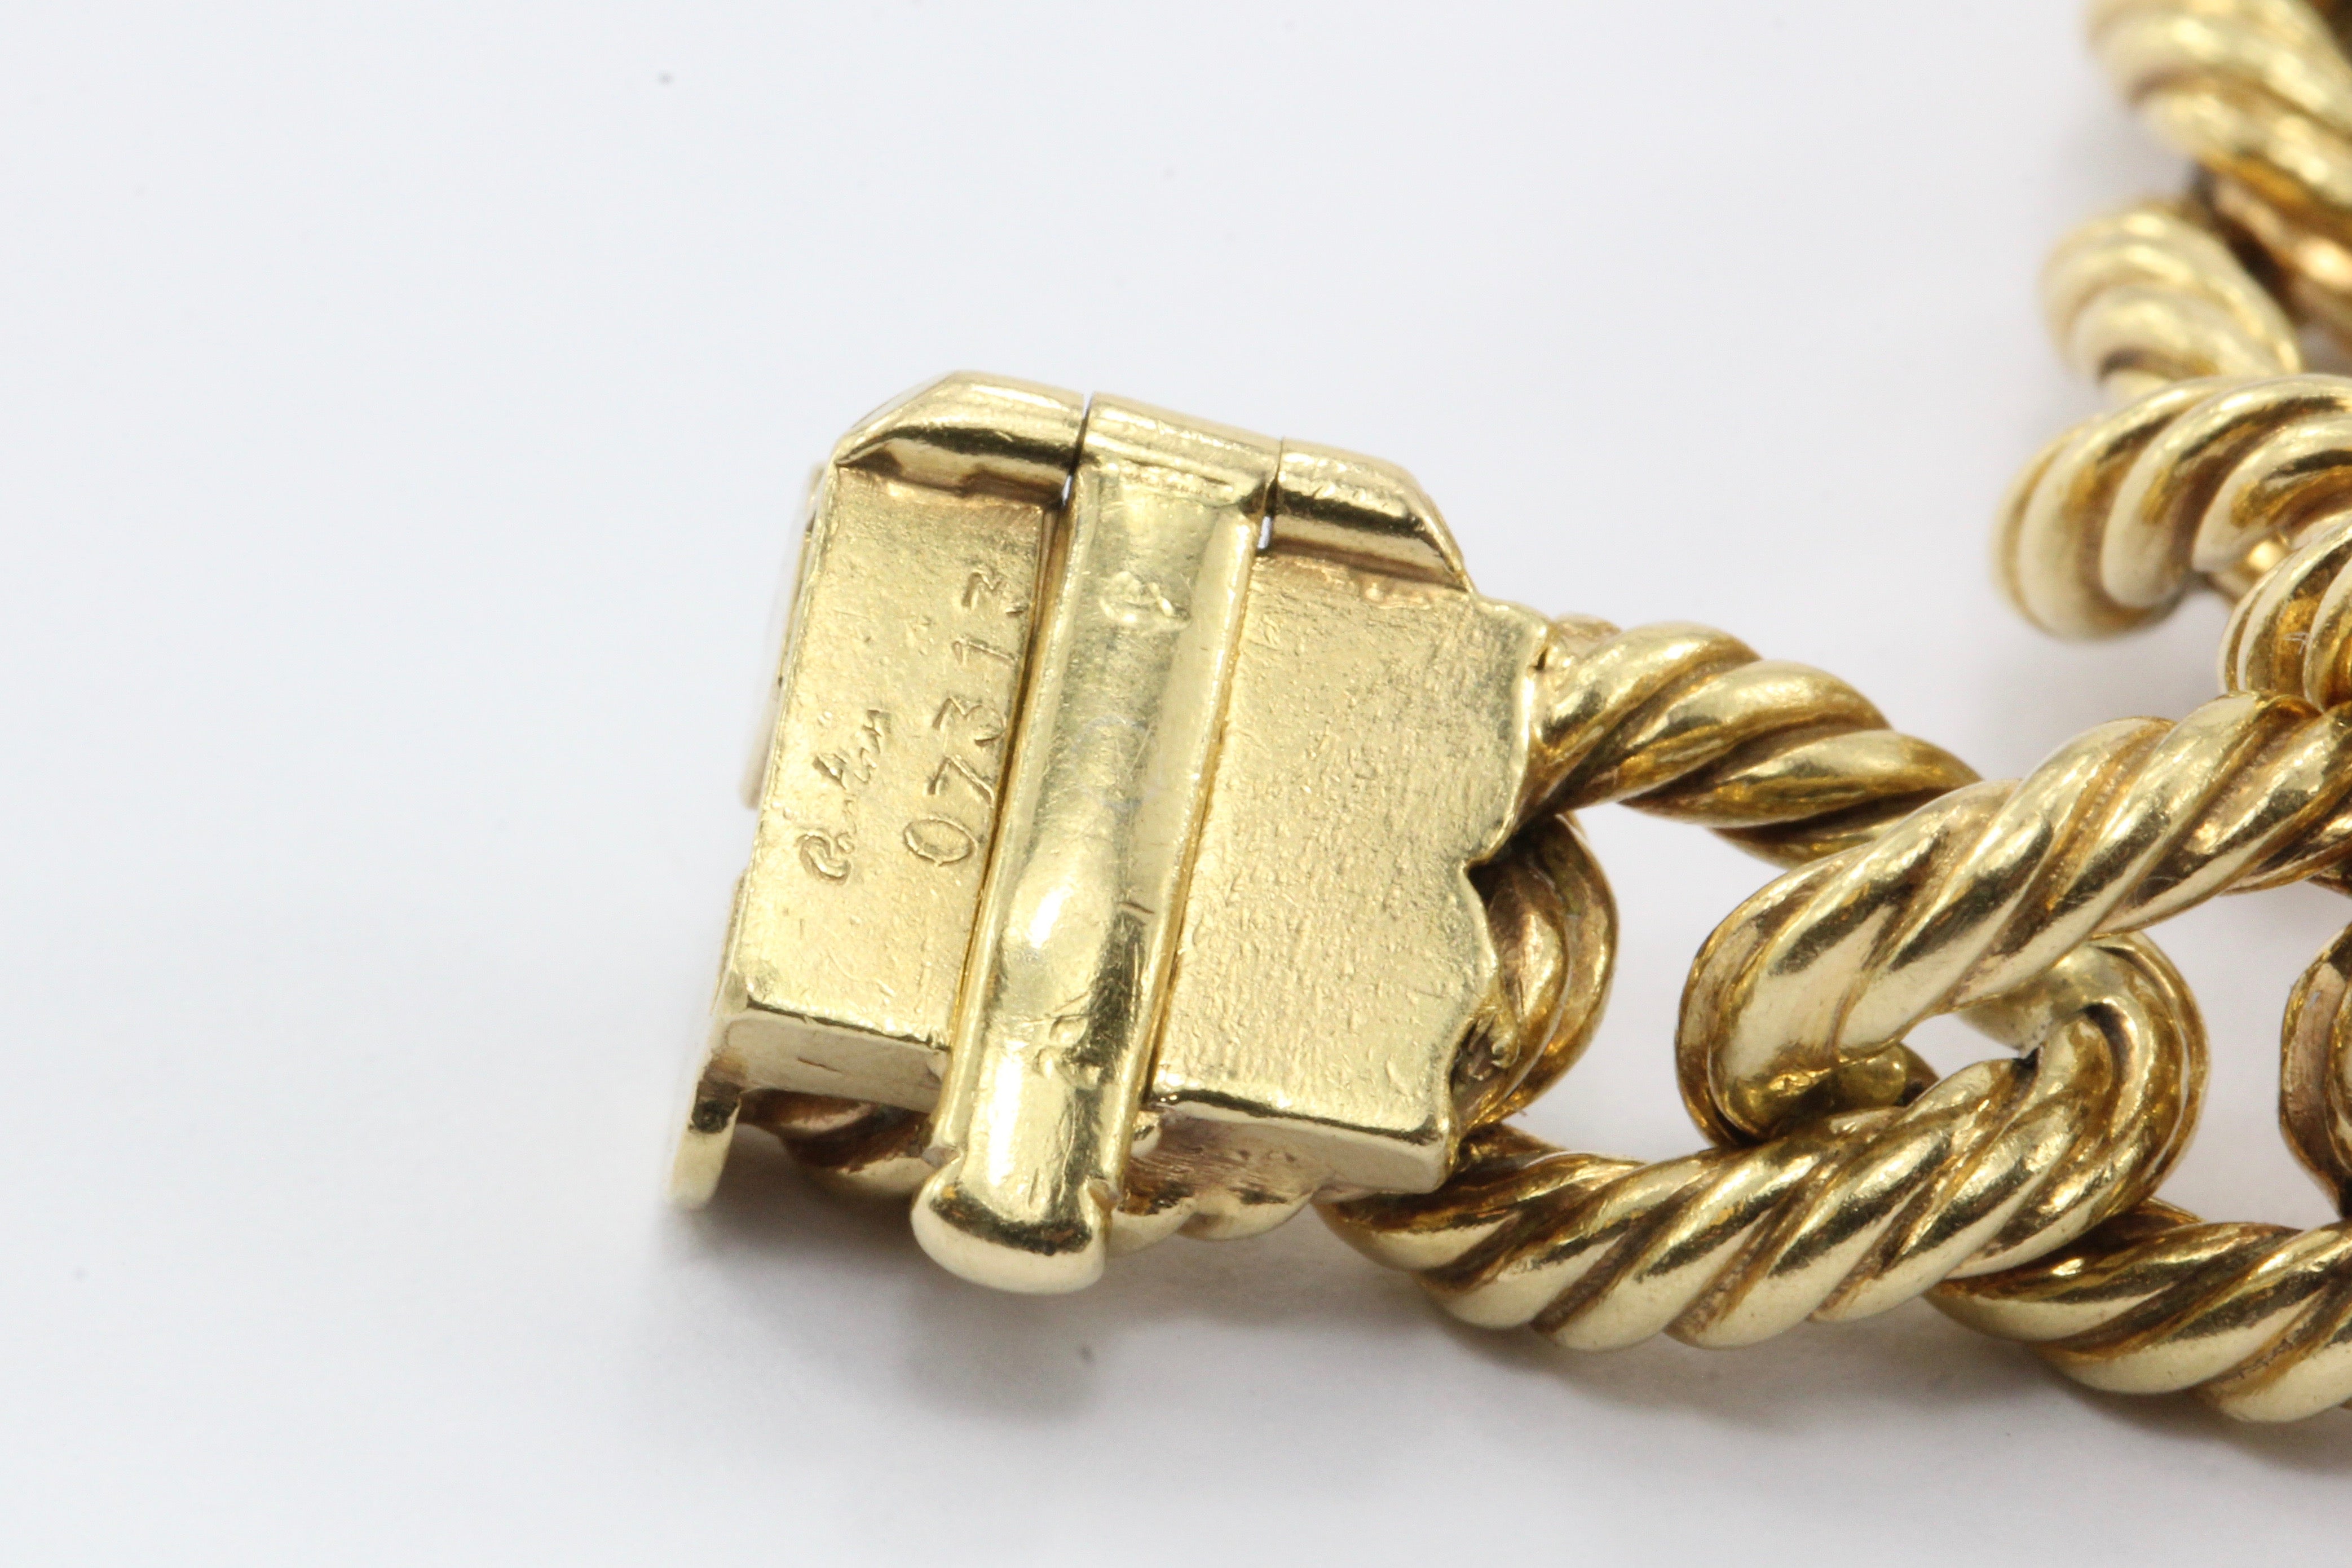 Cartier 18K Gold French Retro Loaded Charm Bracelet c.1950's